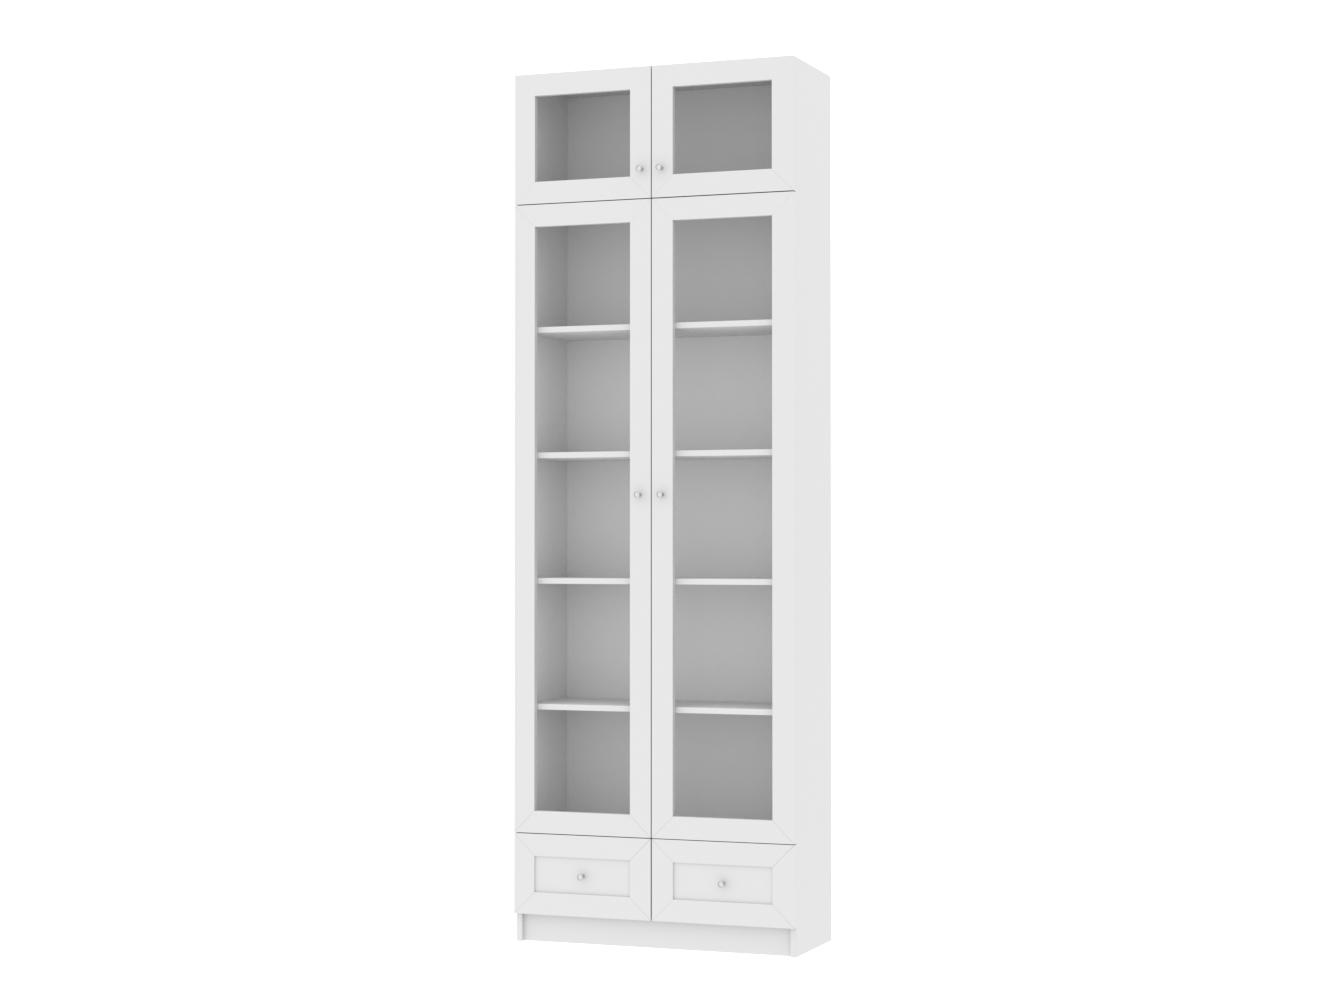 Книжный шкаф Билли 323 white ИКЕА (IKEA) изображение товара